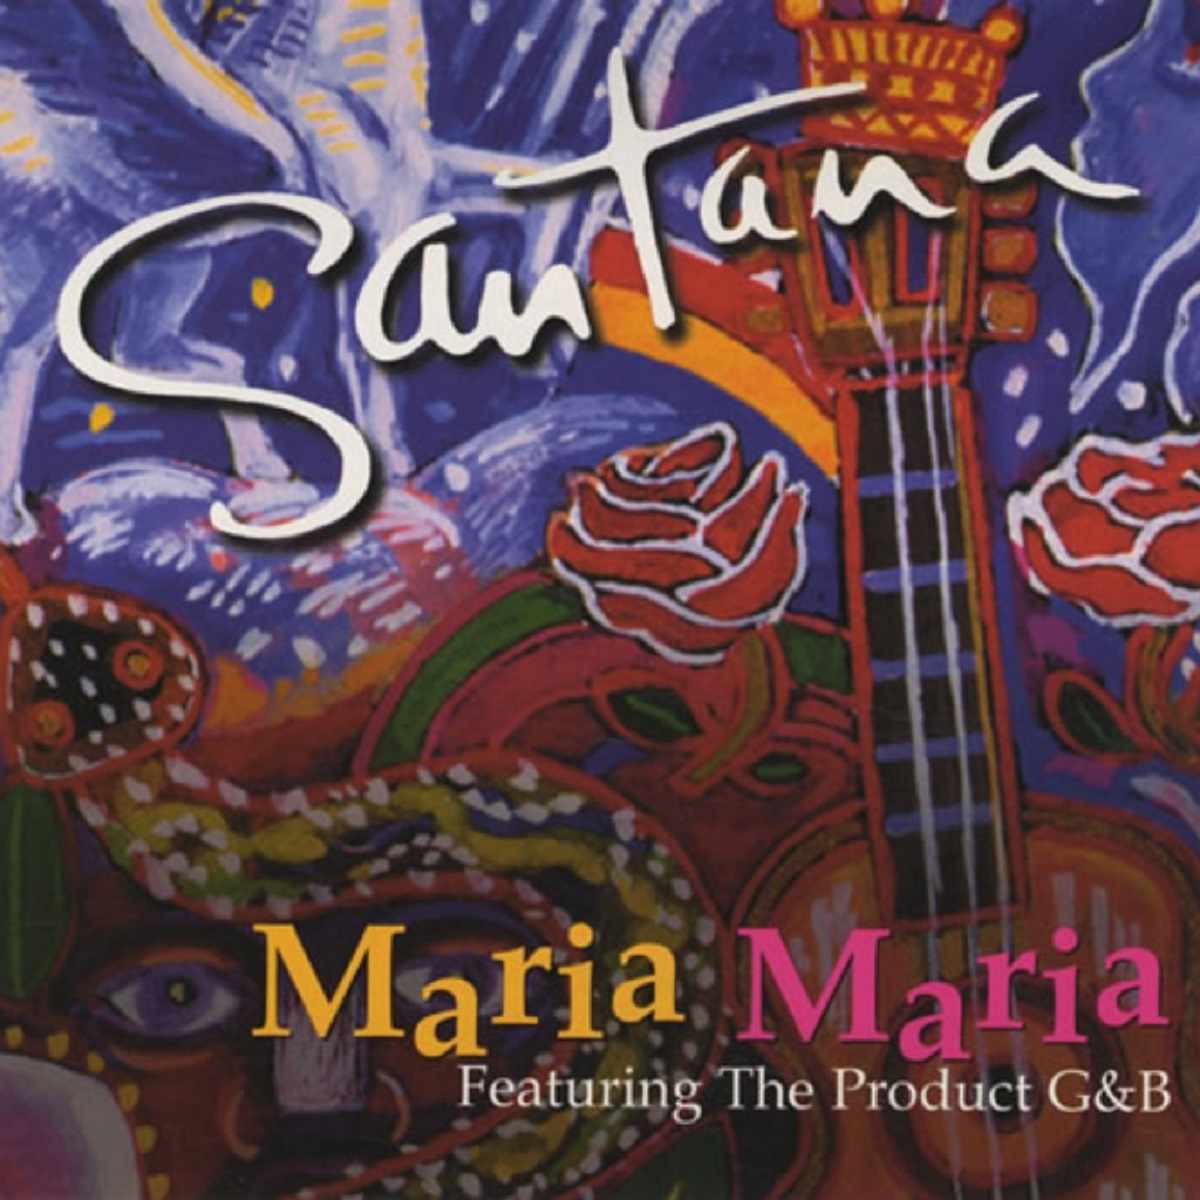 Maria ft. Santana Maria Maria. Carlos Santana Maria. Santana CD альбом. Santana Maria набор.